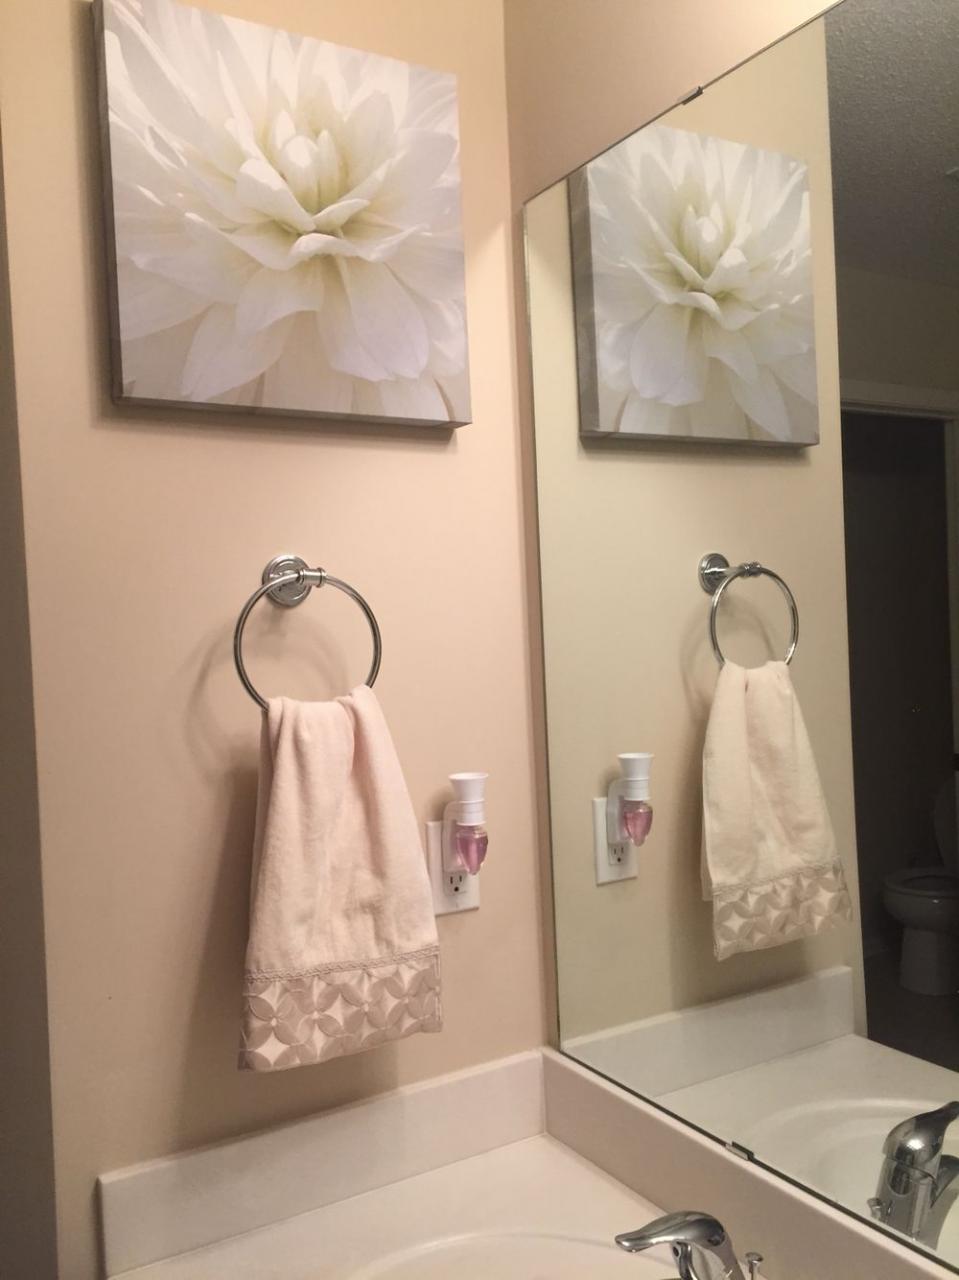 Our bathroom flower theme classy Bathroom flowers, Classy, Bathroom